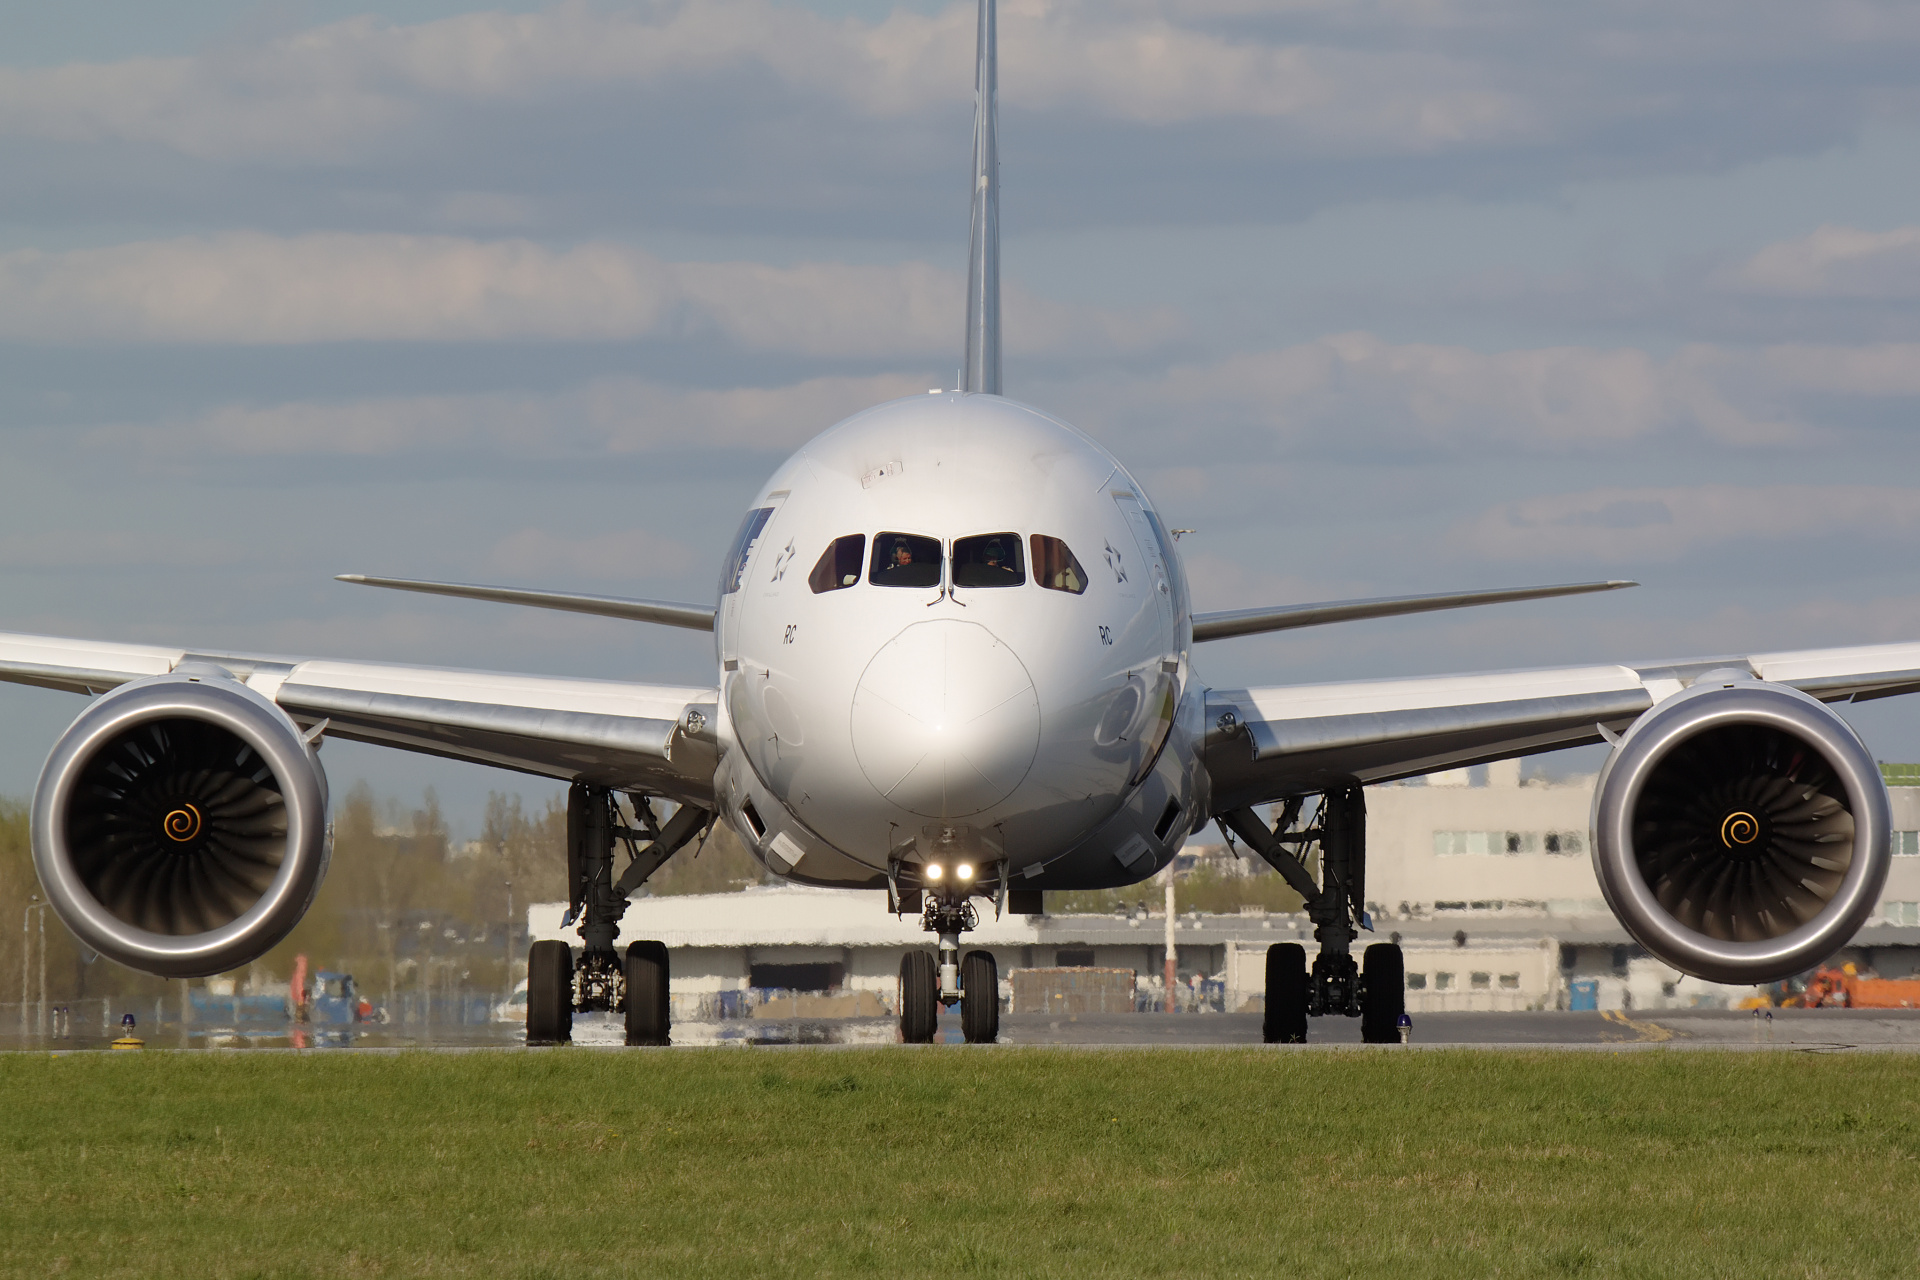 SP-LRC (Aircraft » EPWA Spotting » Boeing 787-8 Dreamliner » LOT Polish Airlines)